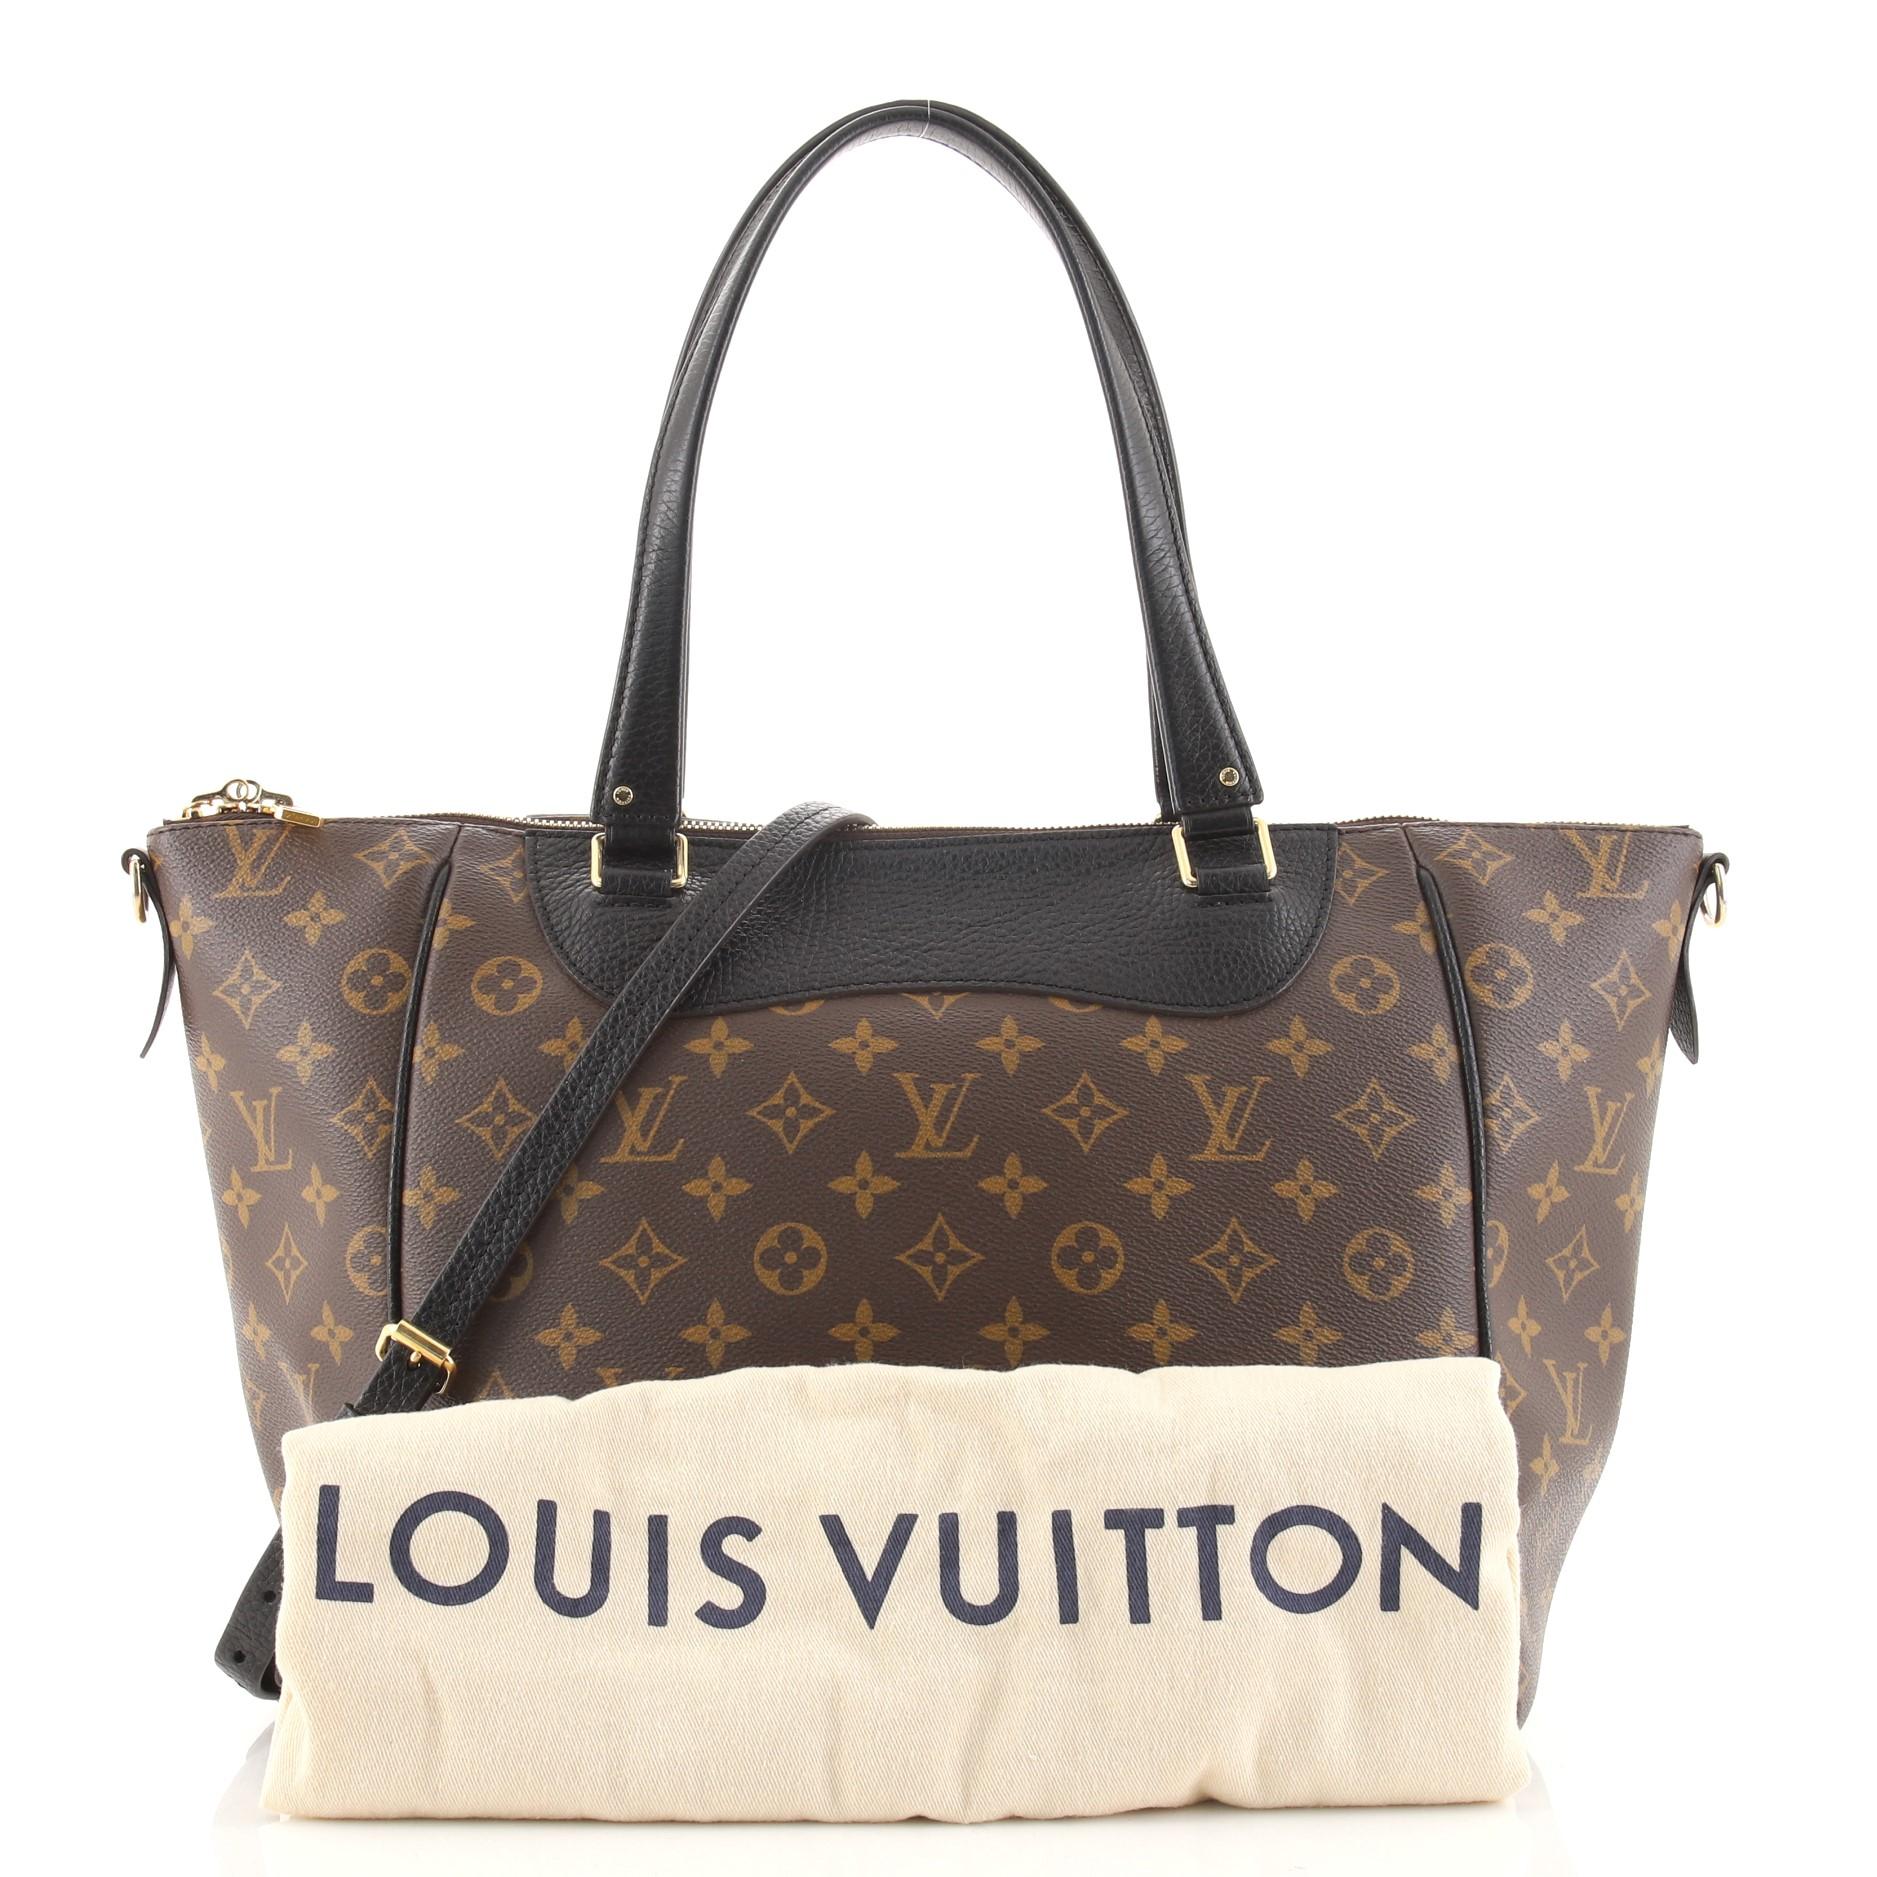 Estrela Louis Vuitton Bag - 2 For Sale on 1stDibs